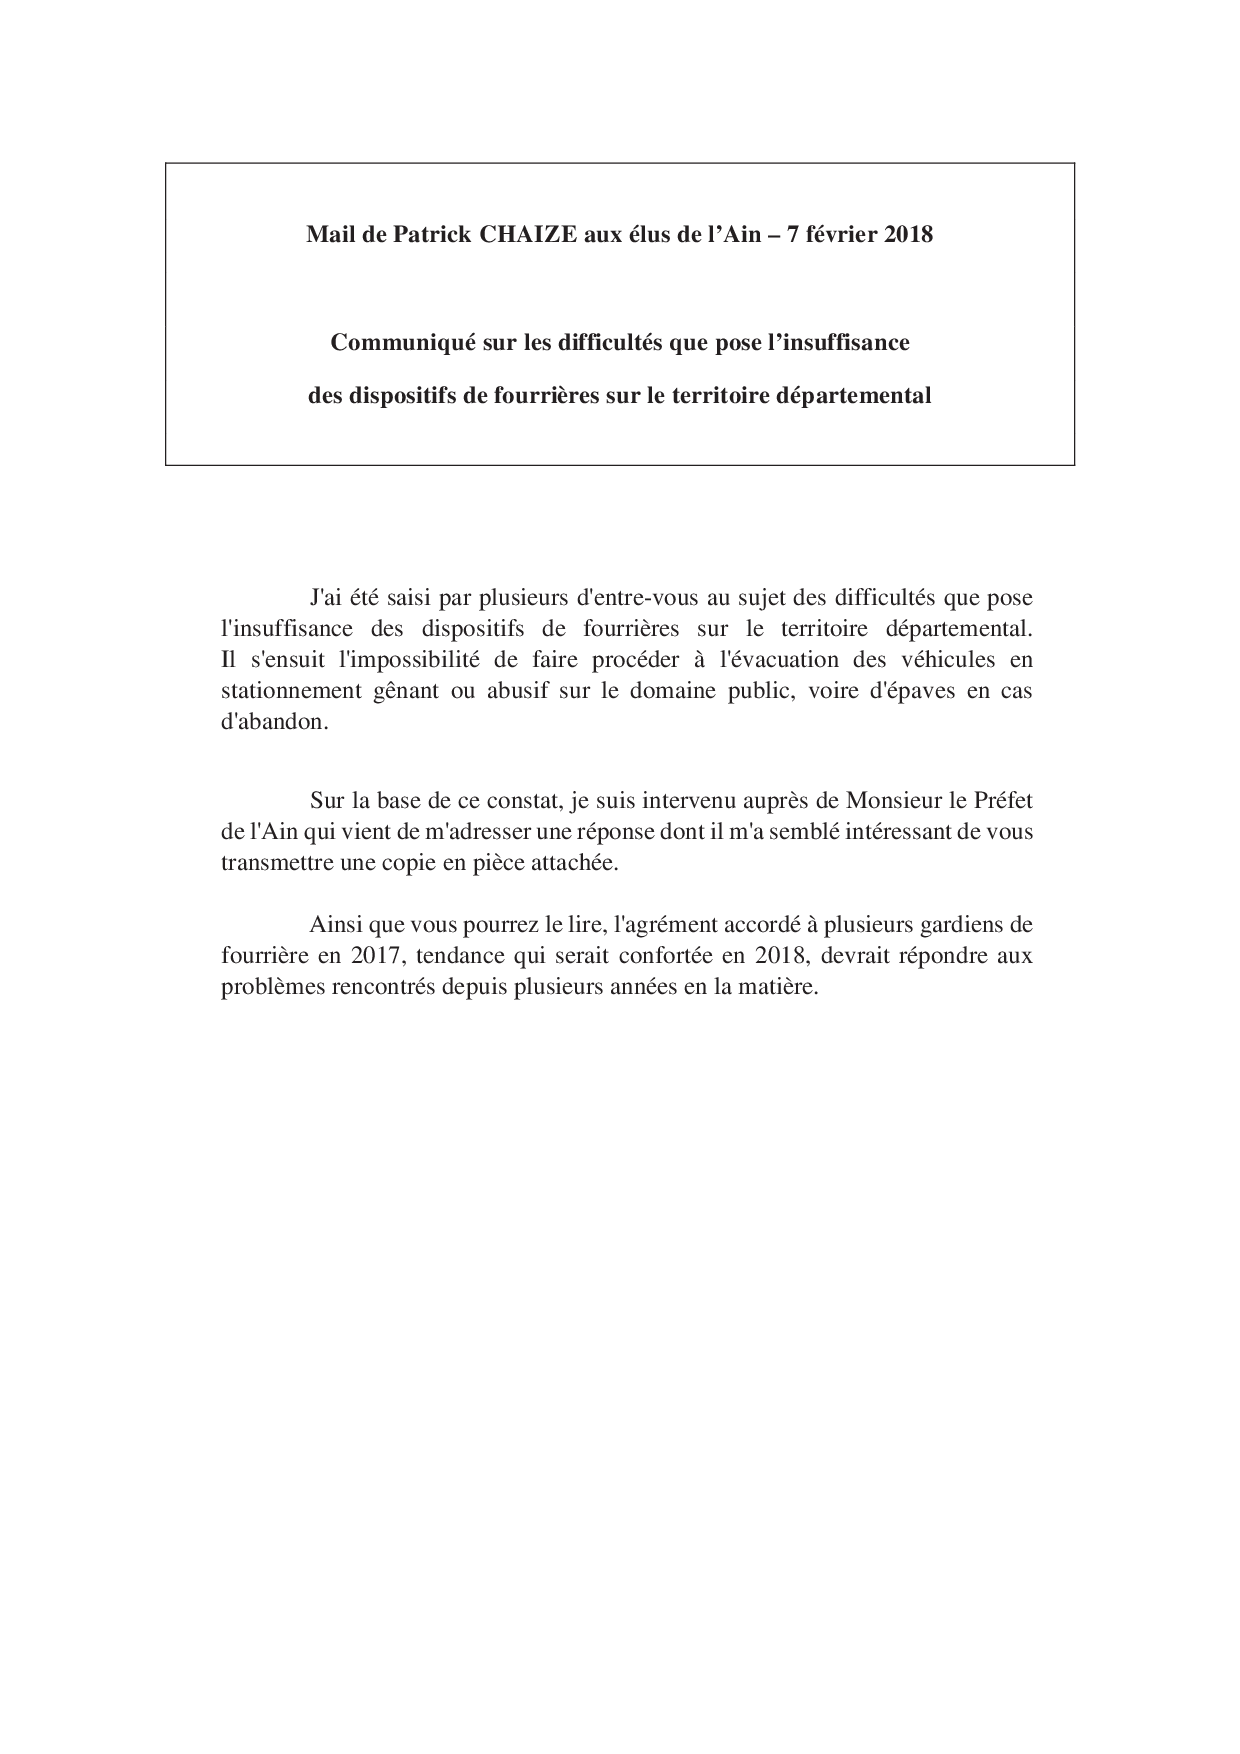 Mail_Information_Insuffisance_Dispositifs_Fourrières_20180207